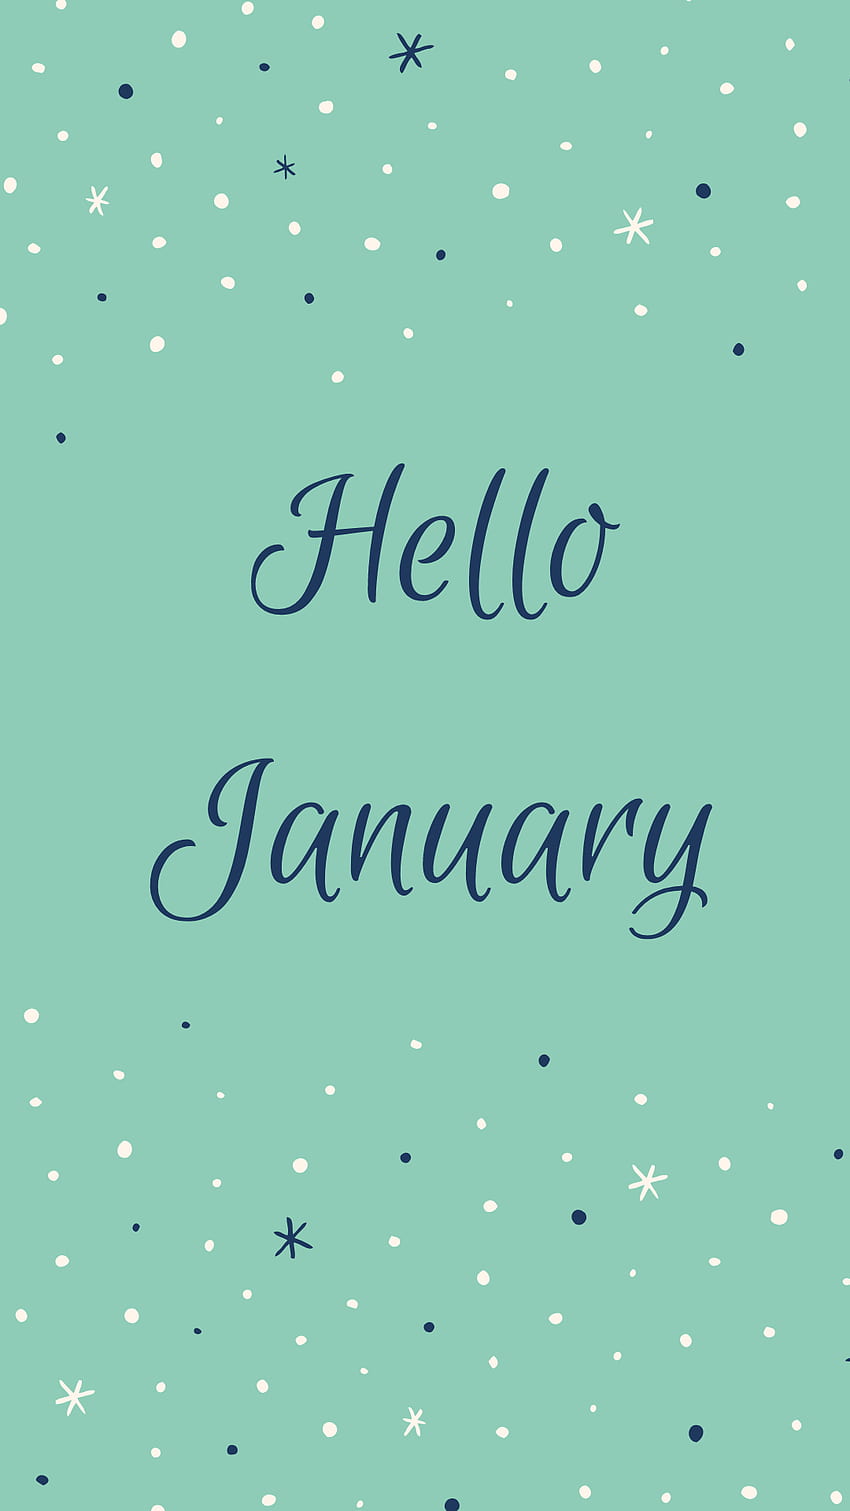 January 2022 Calendar iPhone Backgrounds  PixelsTalkNet